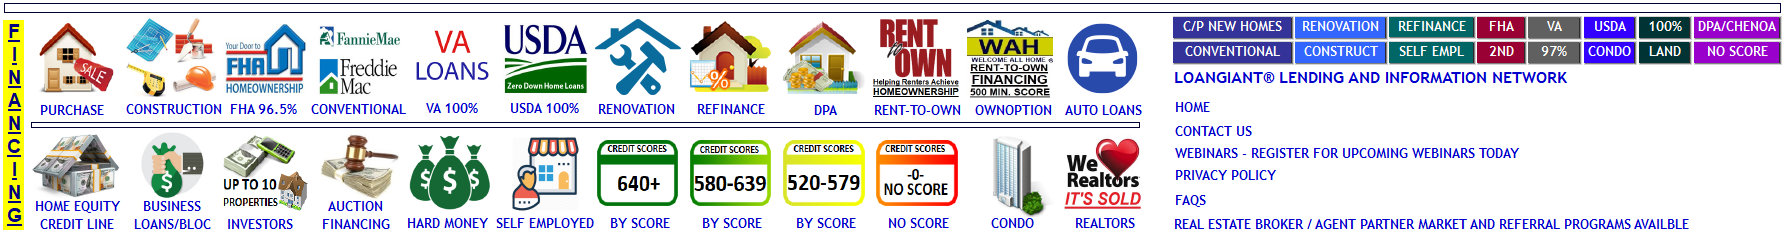 loan_giant_mortgages_loans_money001048.jpg